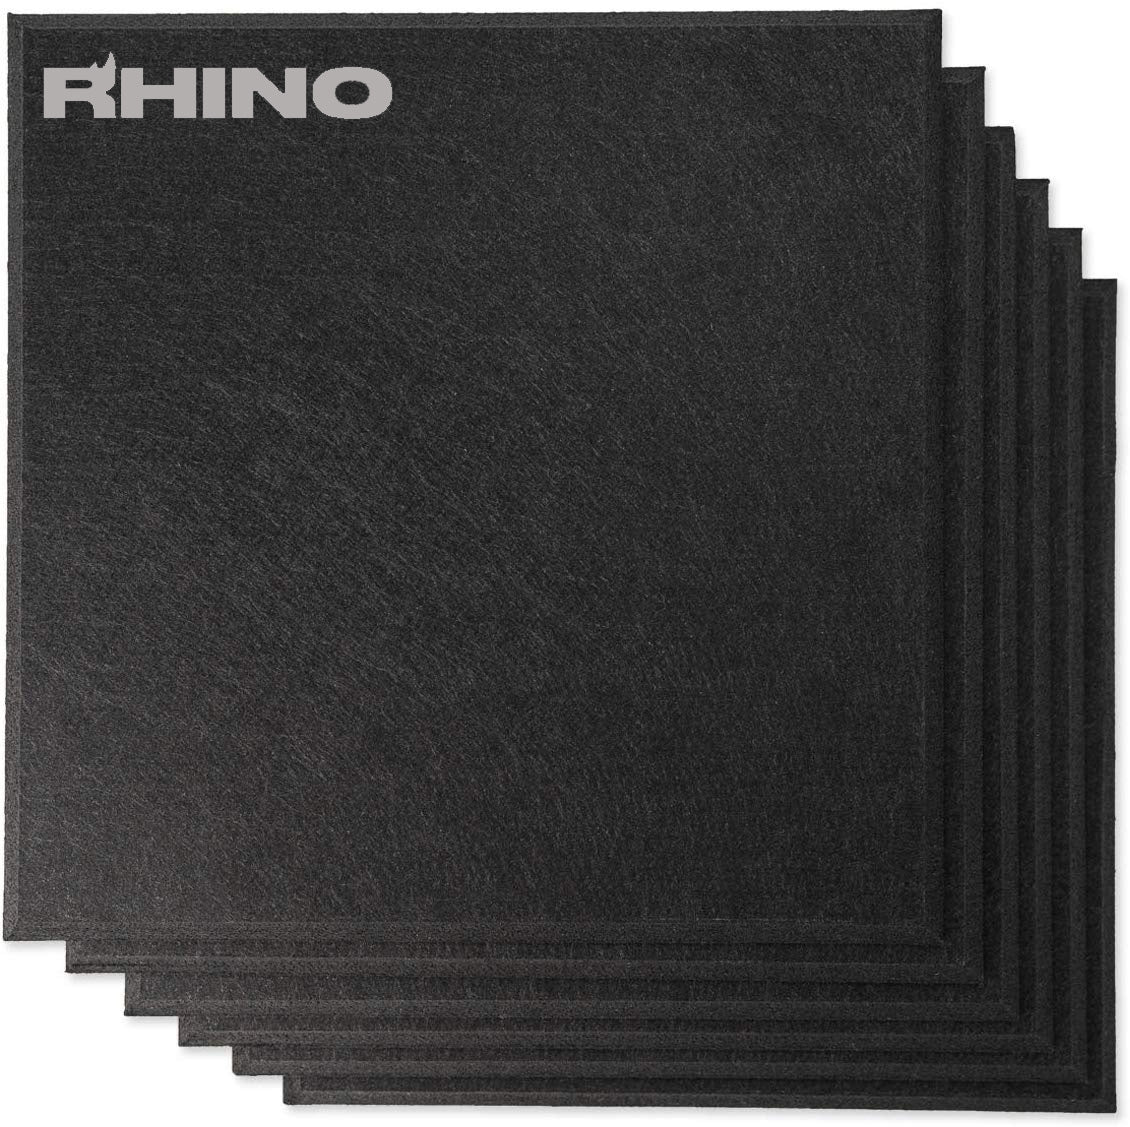 Rhino Acoustic Sound Panel - Partsaccessoriesusa